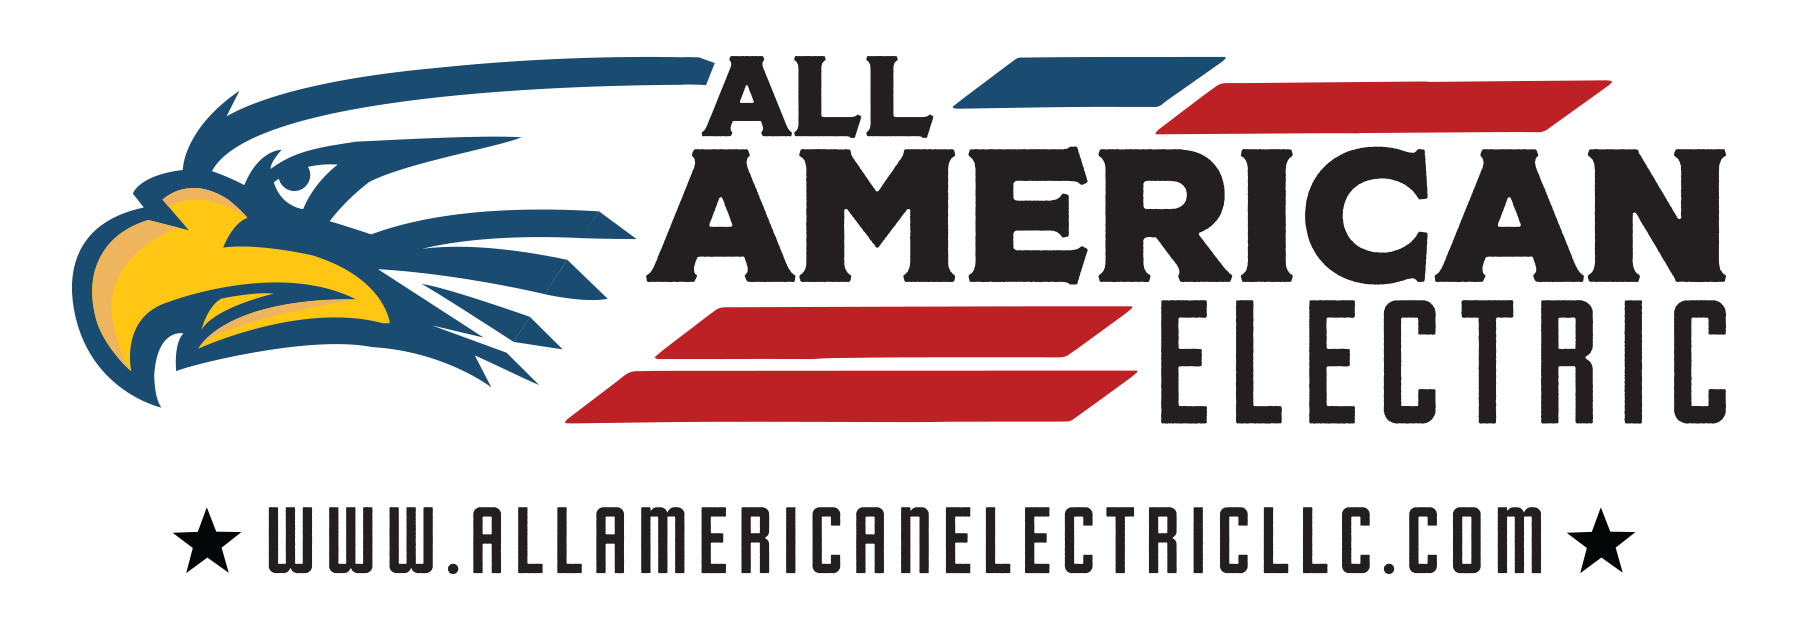 All American Electric Services, LLC Logo